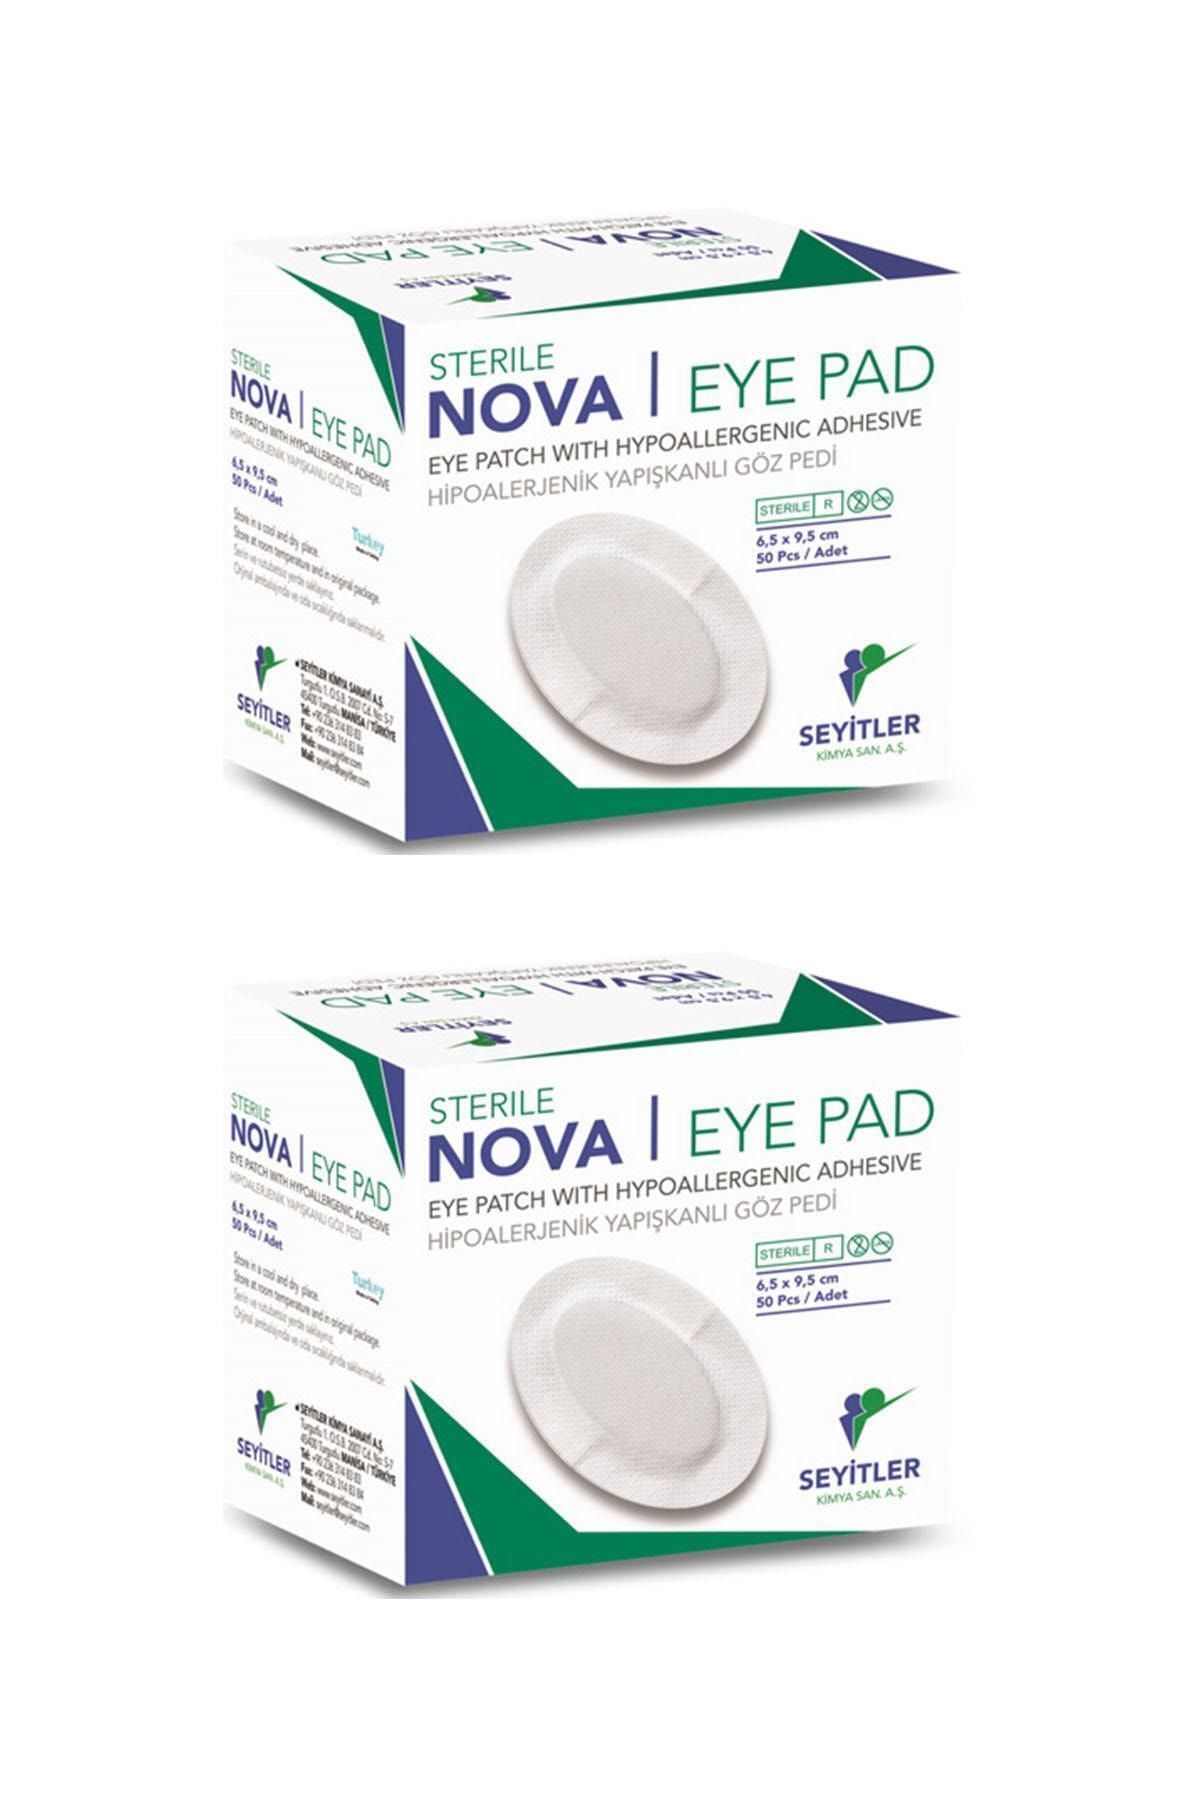 Nova Ped Yetişkin Göz Kapama Bandı Göz Pedi 6,5x9,5cm-100 Adet